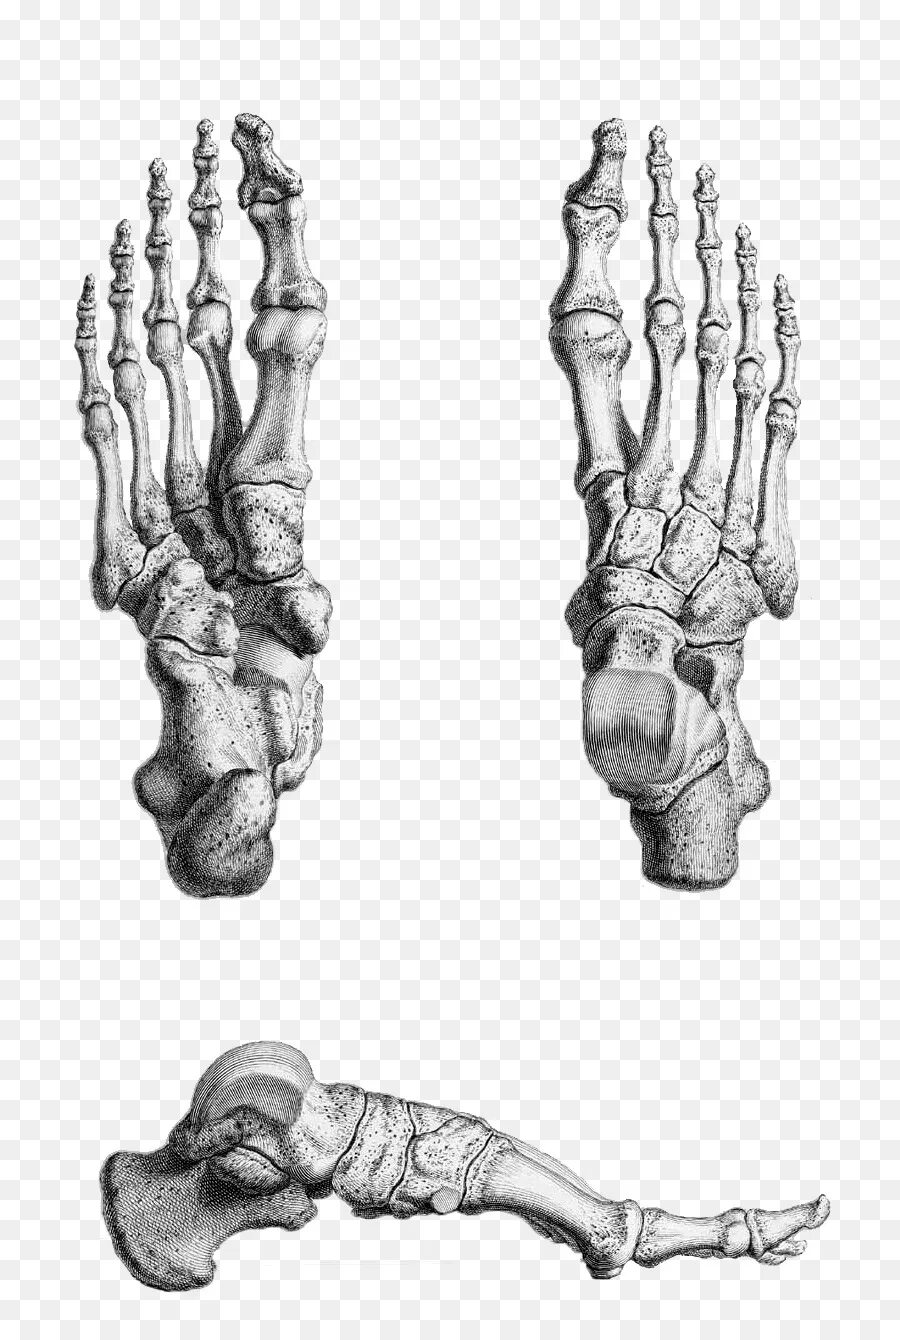 Кости стопы человека анатомия. Косточки стопы анатомия. Стопа анатомия строение кости. Кости ступни человека анатомия.